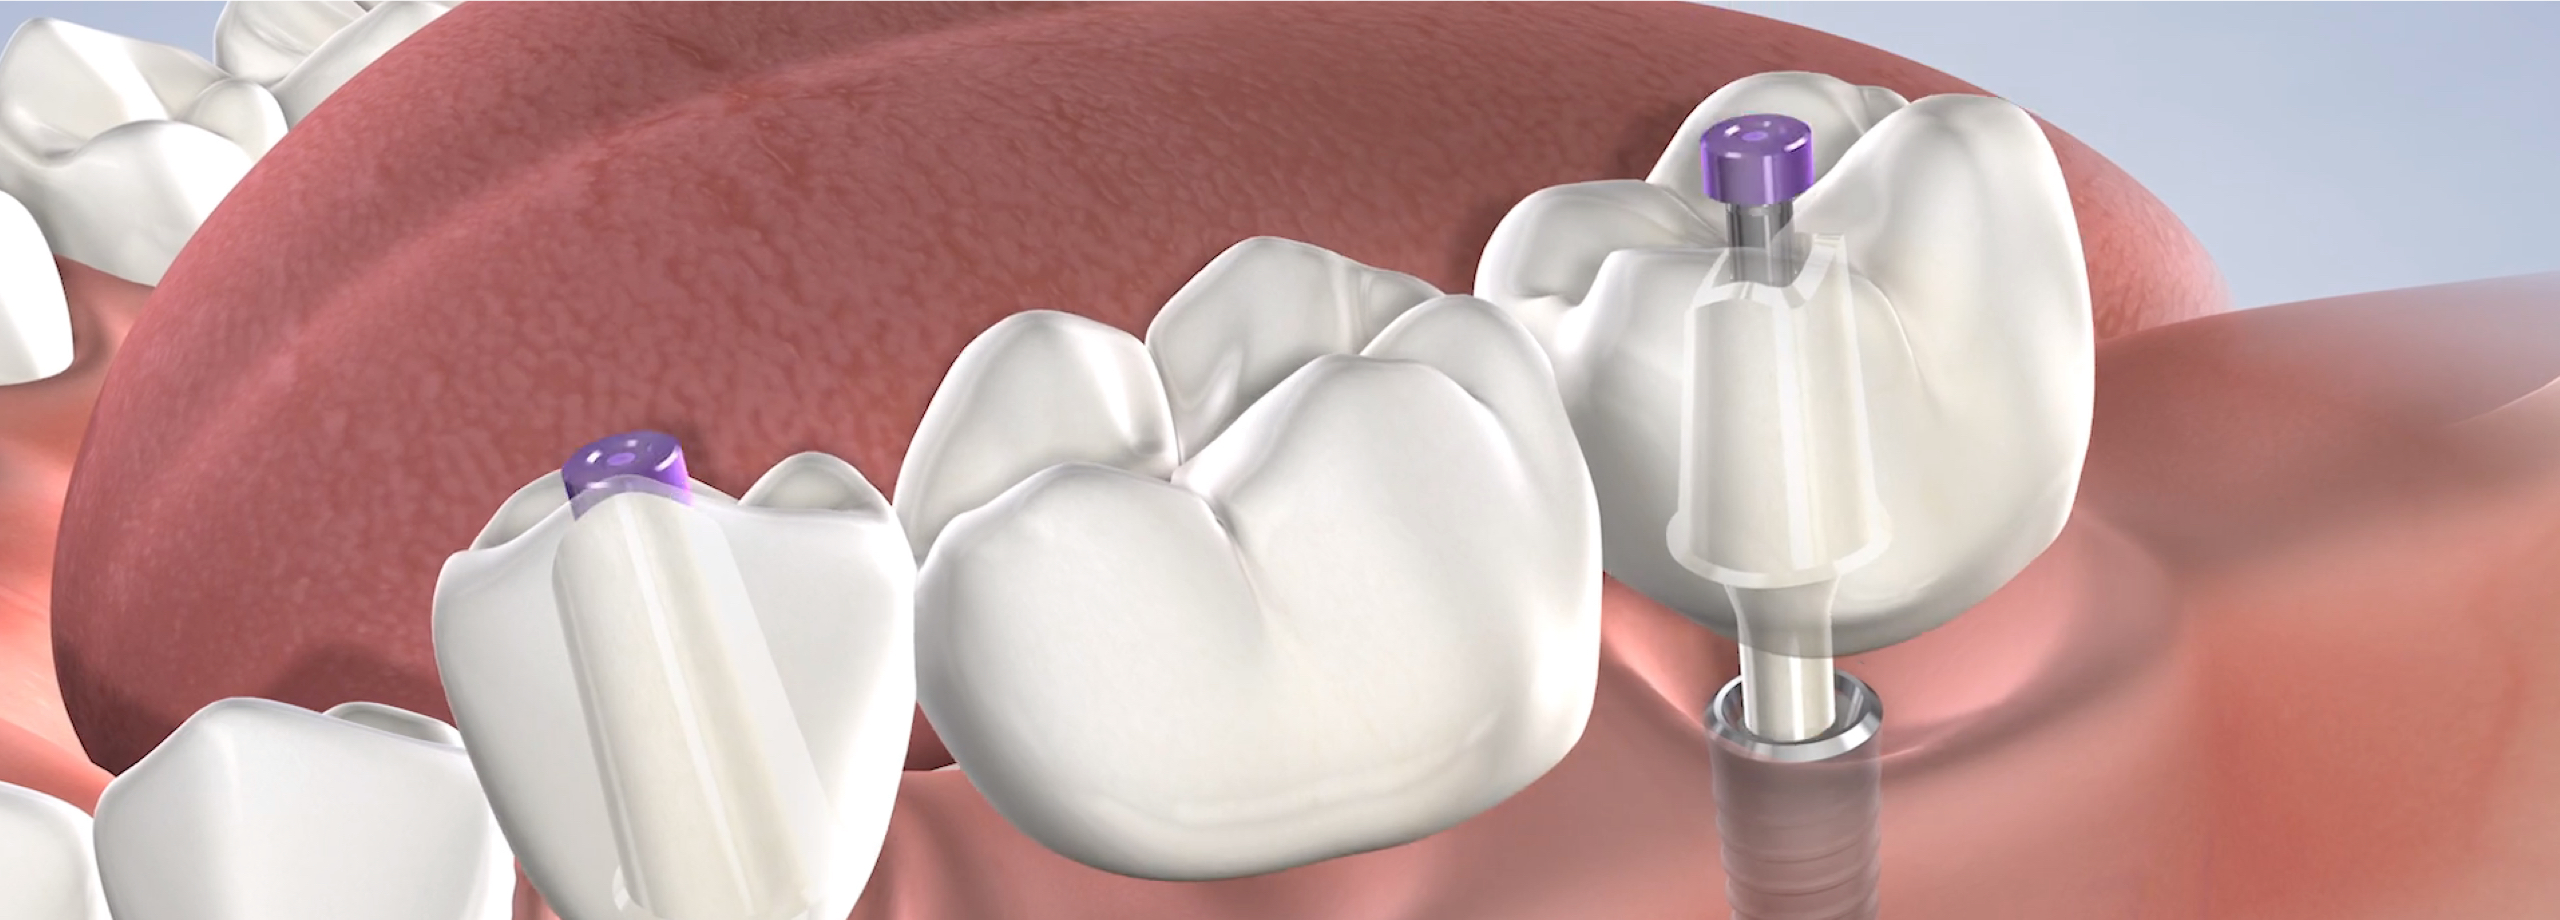 KOMS/DEV/procedure dental-implant-benefits-video